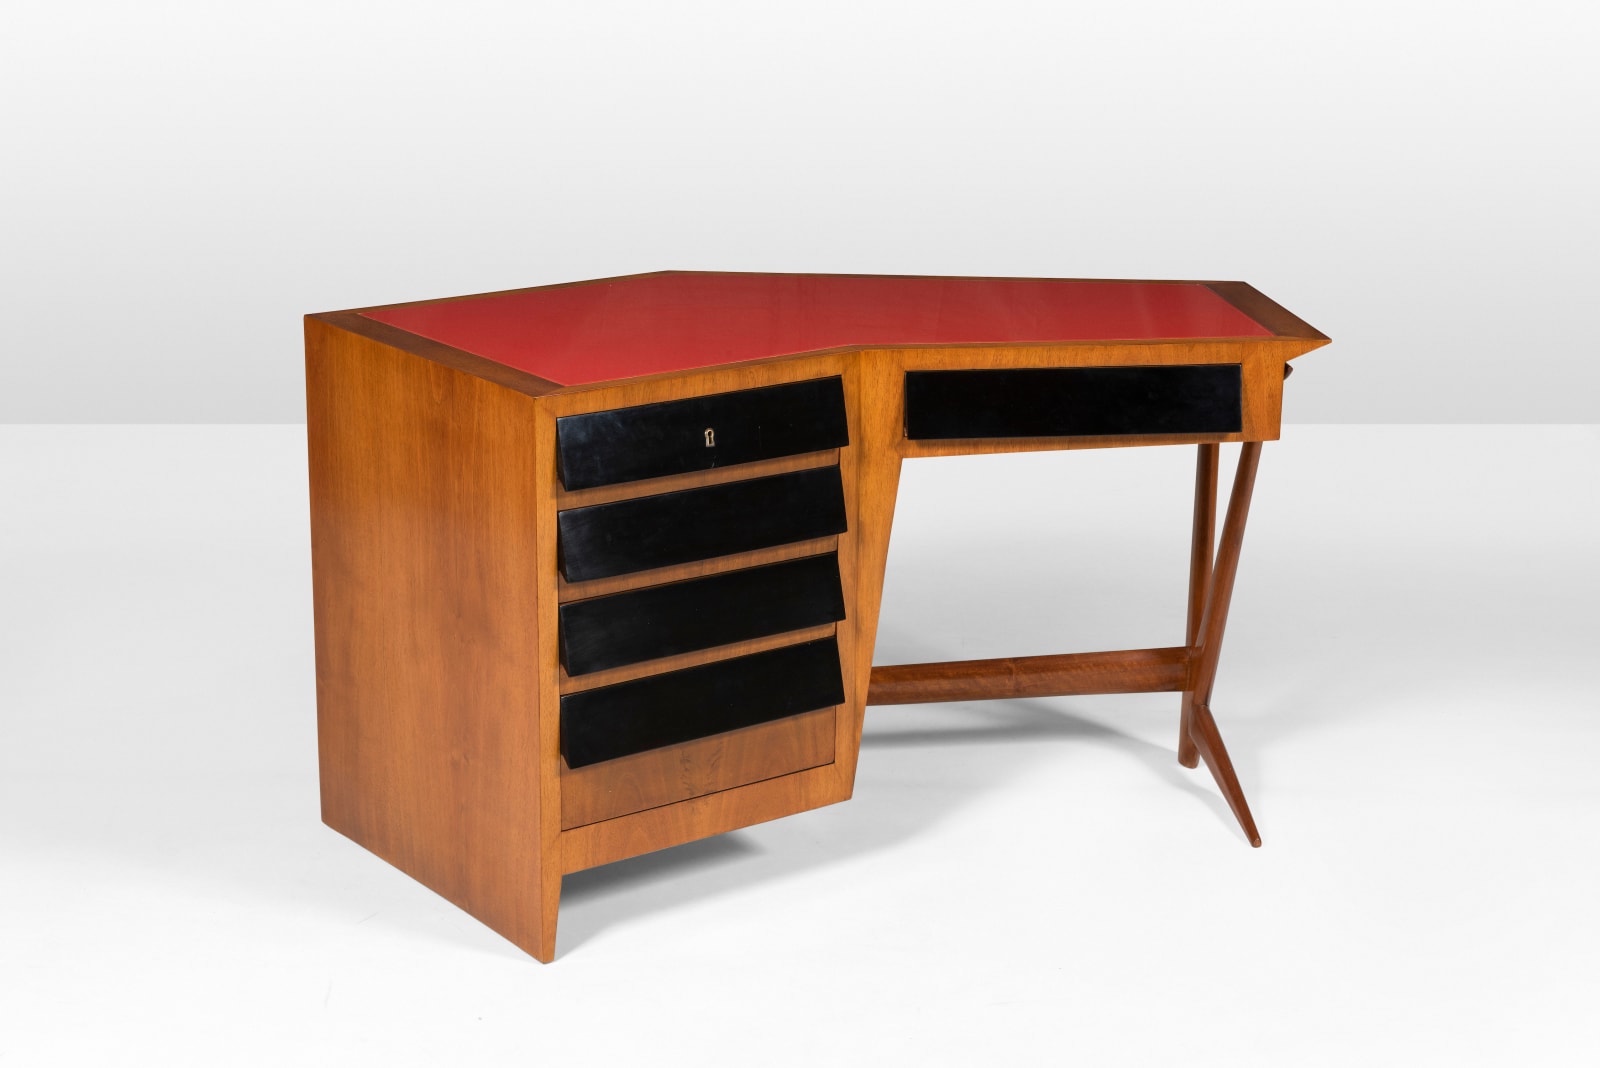 Walnut Ico Parisi desk from 1952 at the Gokelaere & Robinson stand at BRAFA 2023 in Effect Magazine